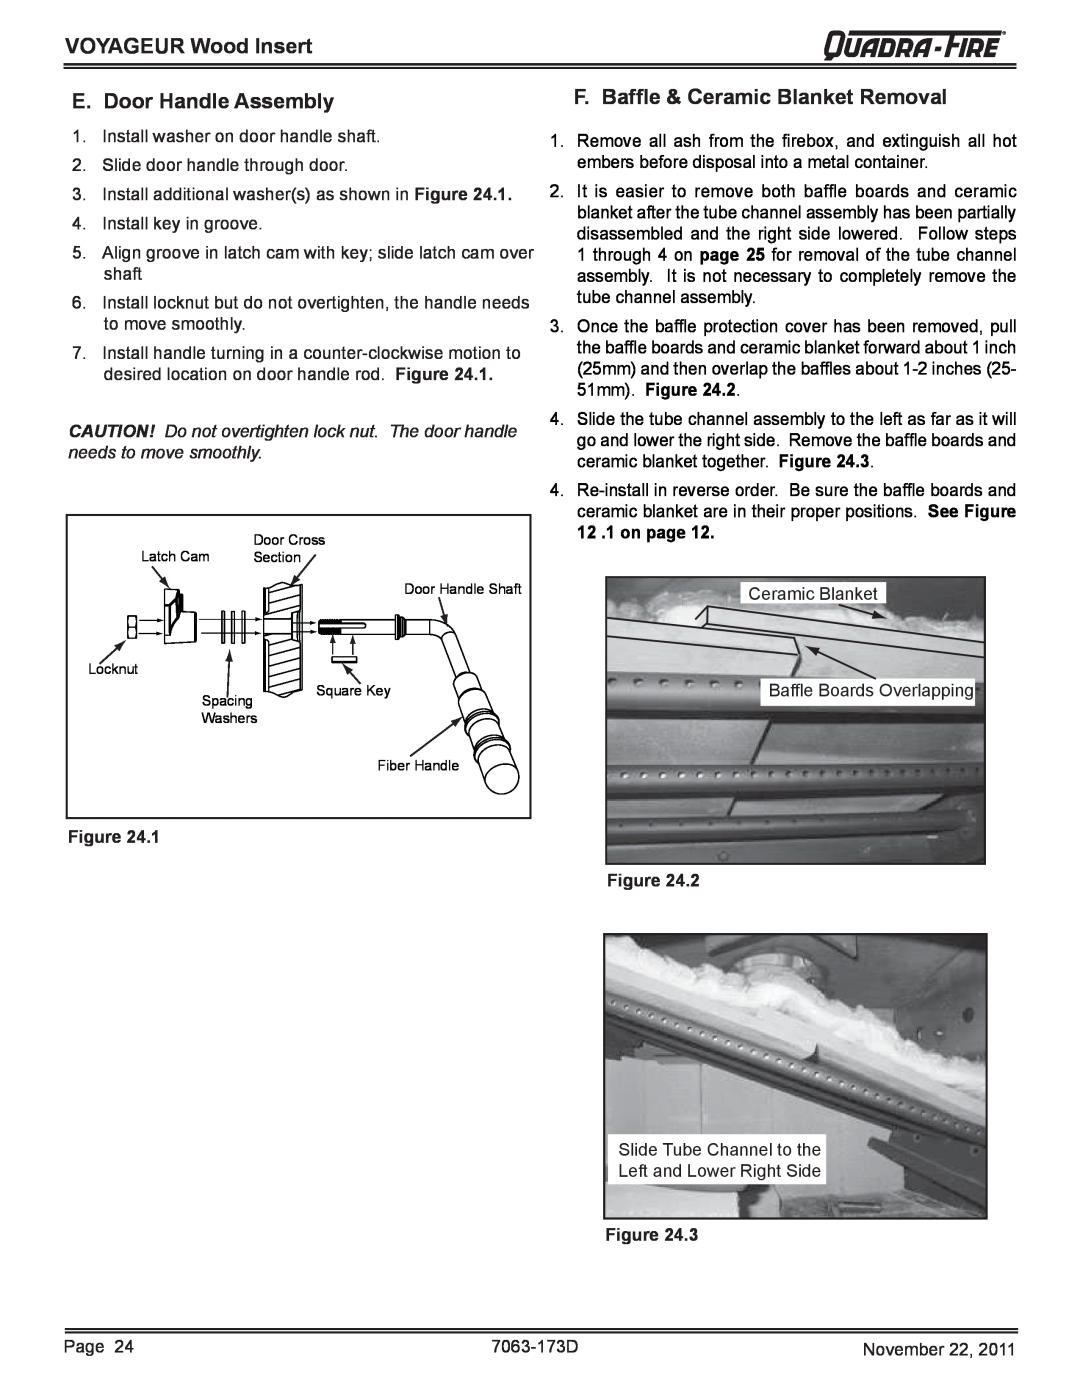 Quadra-Fire VOYAGEUR-PMH E. Door Handle Assembly, F. Bafﬂ e & Ceramic Blanket Removal, VOYAGEUR Wood Insert, Figure 